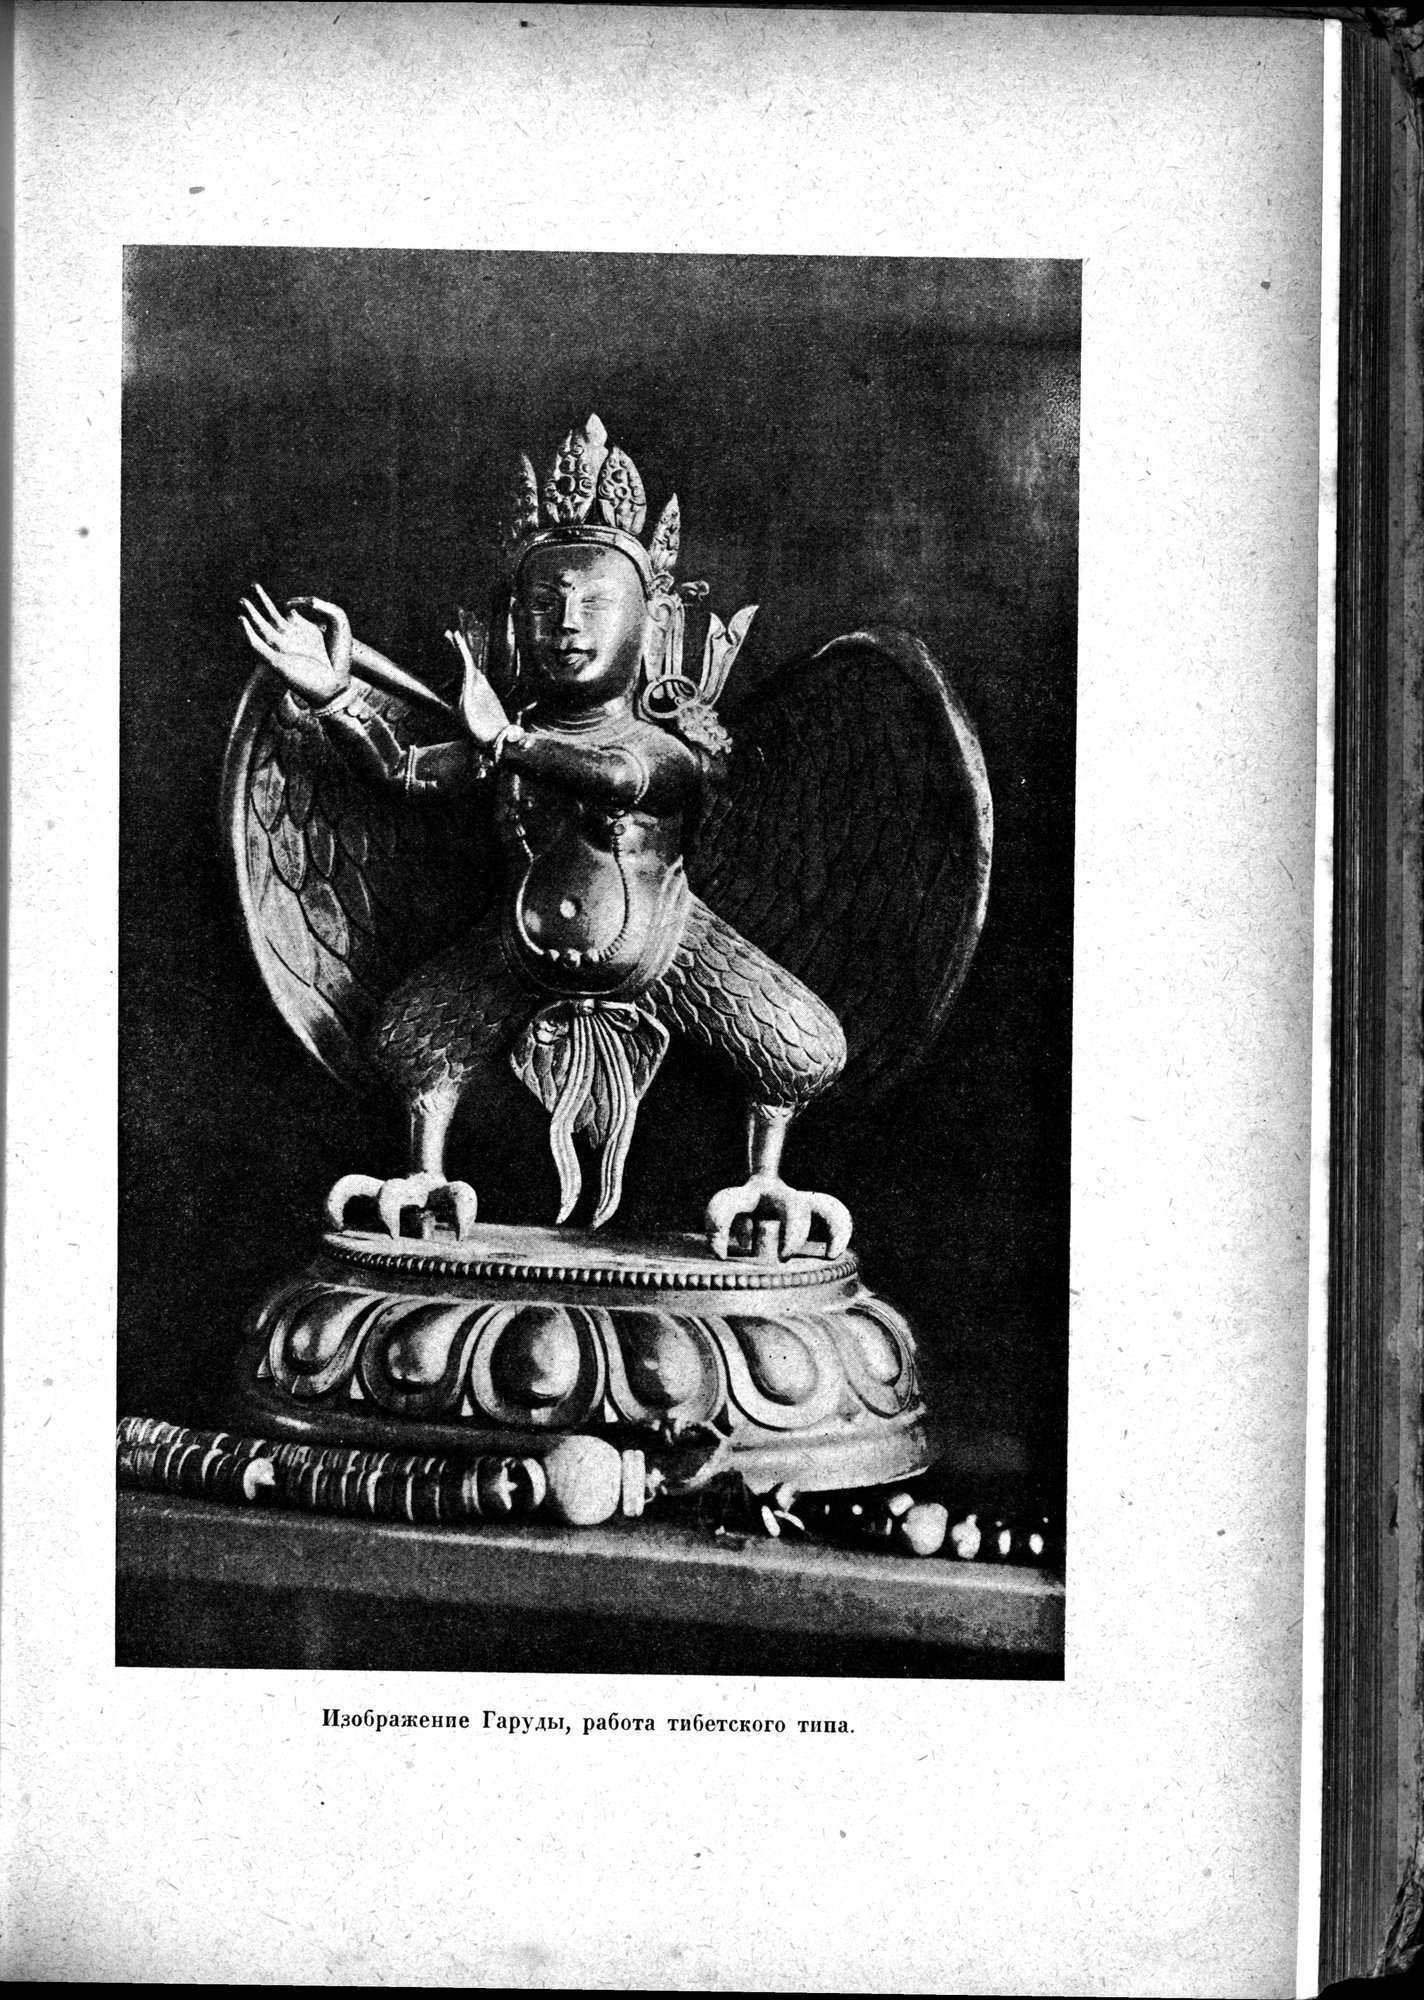 Mongoliya i Amdo i mertby gorod Khara-Khoto : vol.1 / Page 257 (Grayscale High Resolution Image)